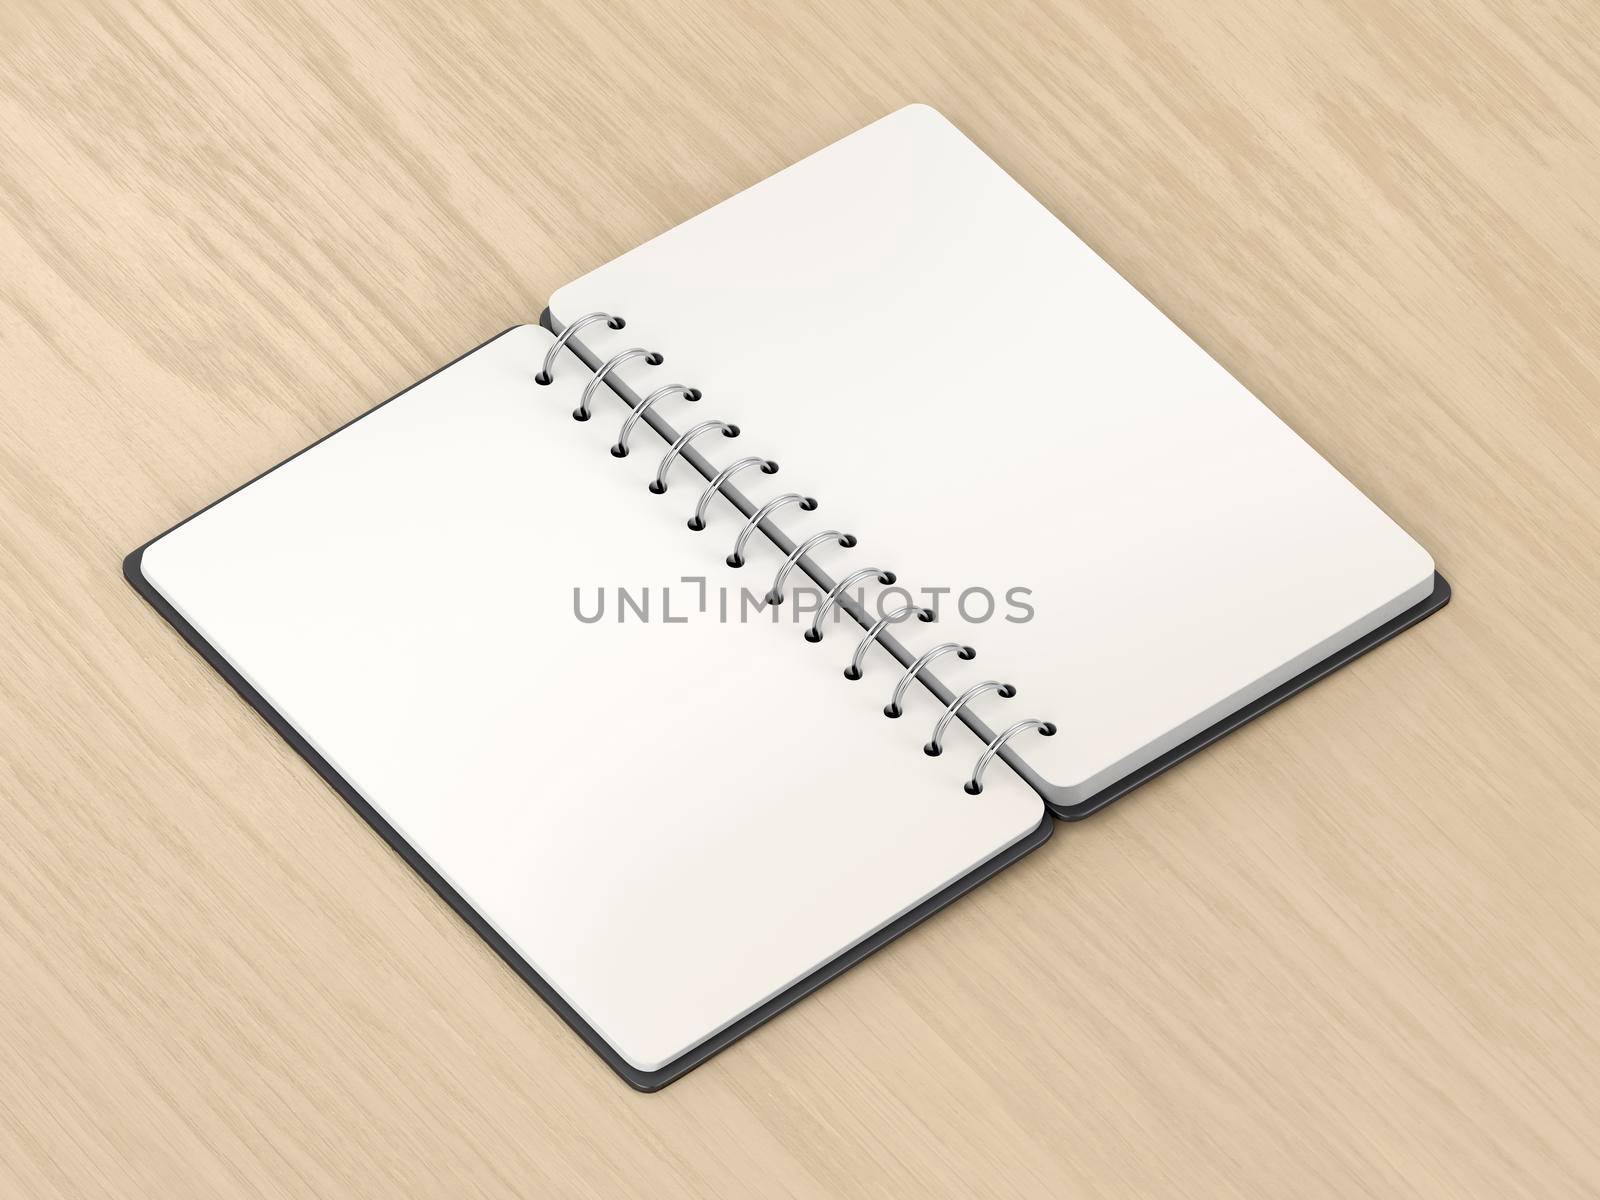 Opened notebook on wooden desk